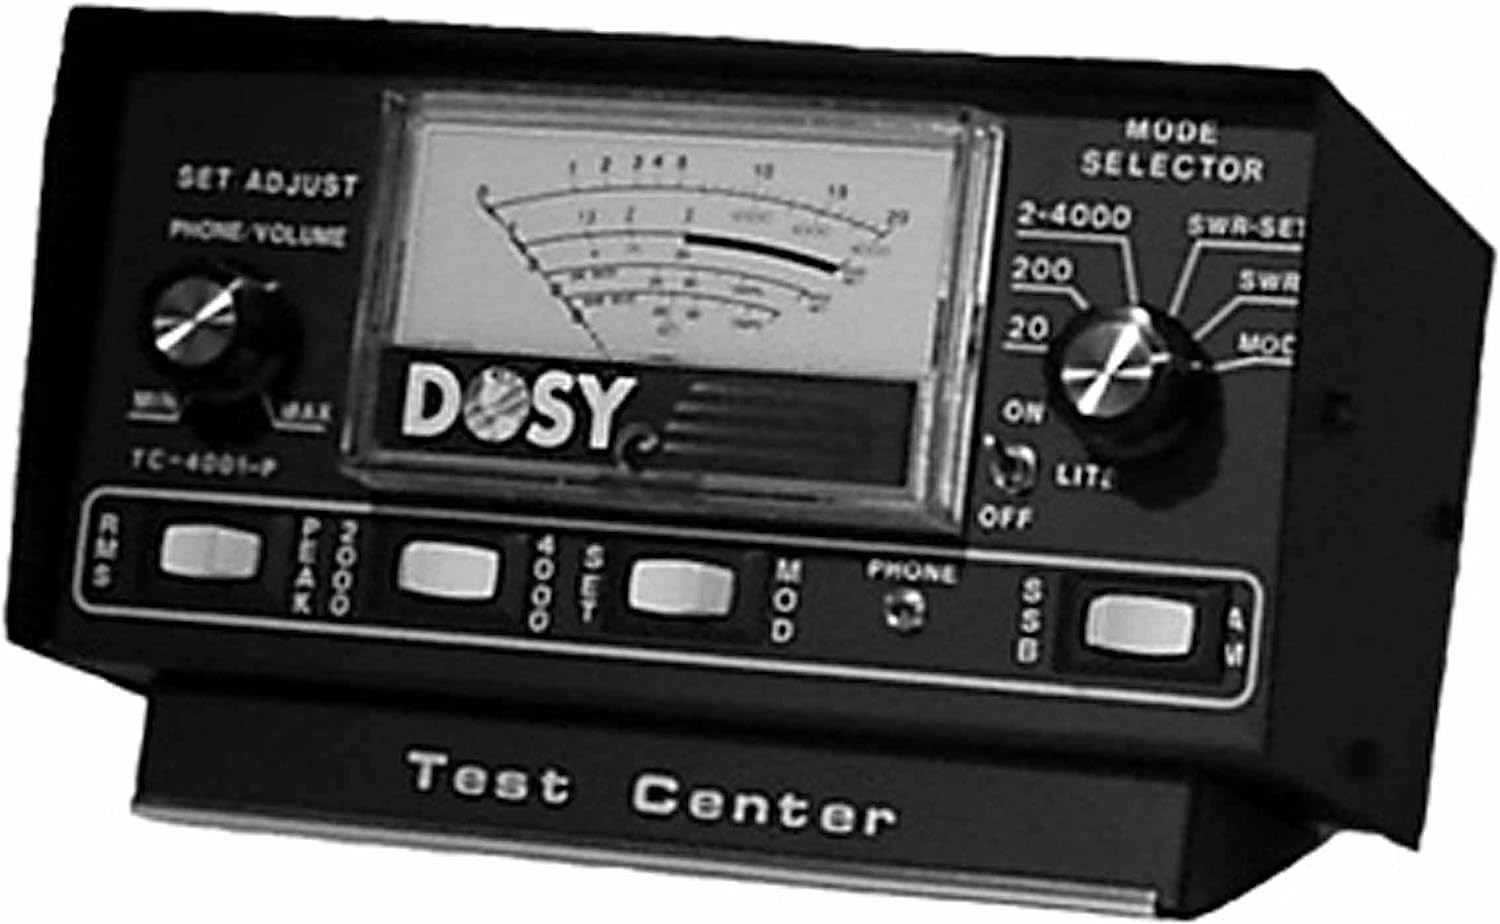 Dosy CB Ham Radio SWR Watt Meter TC-4001P Test center